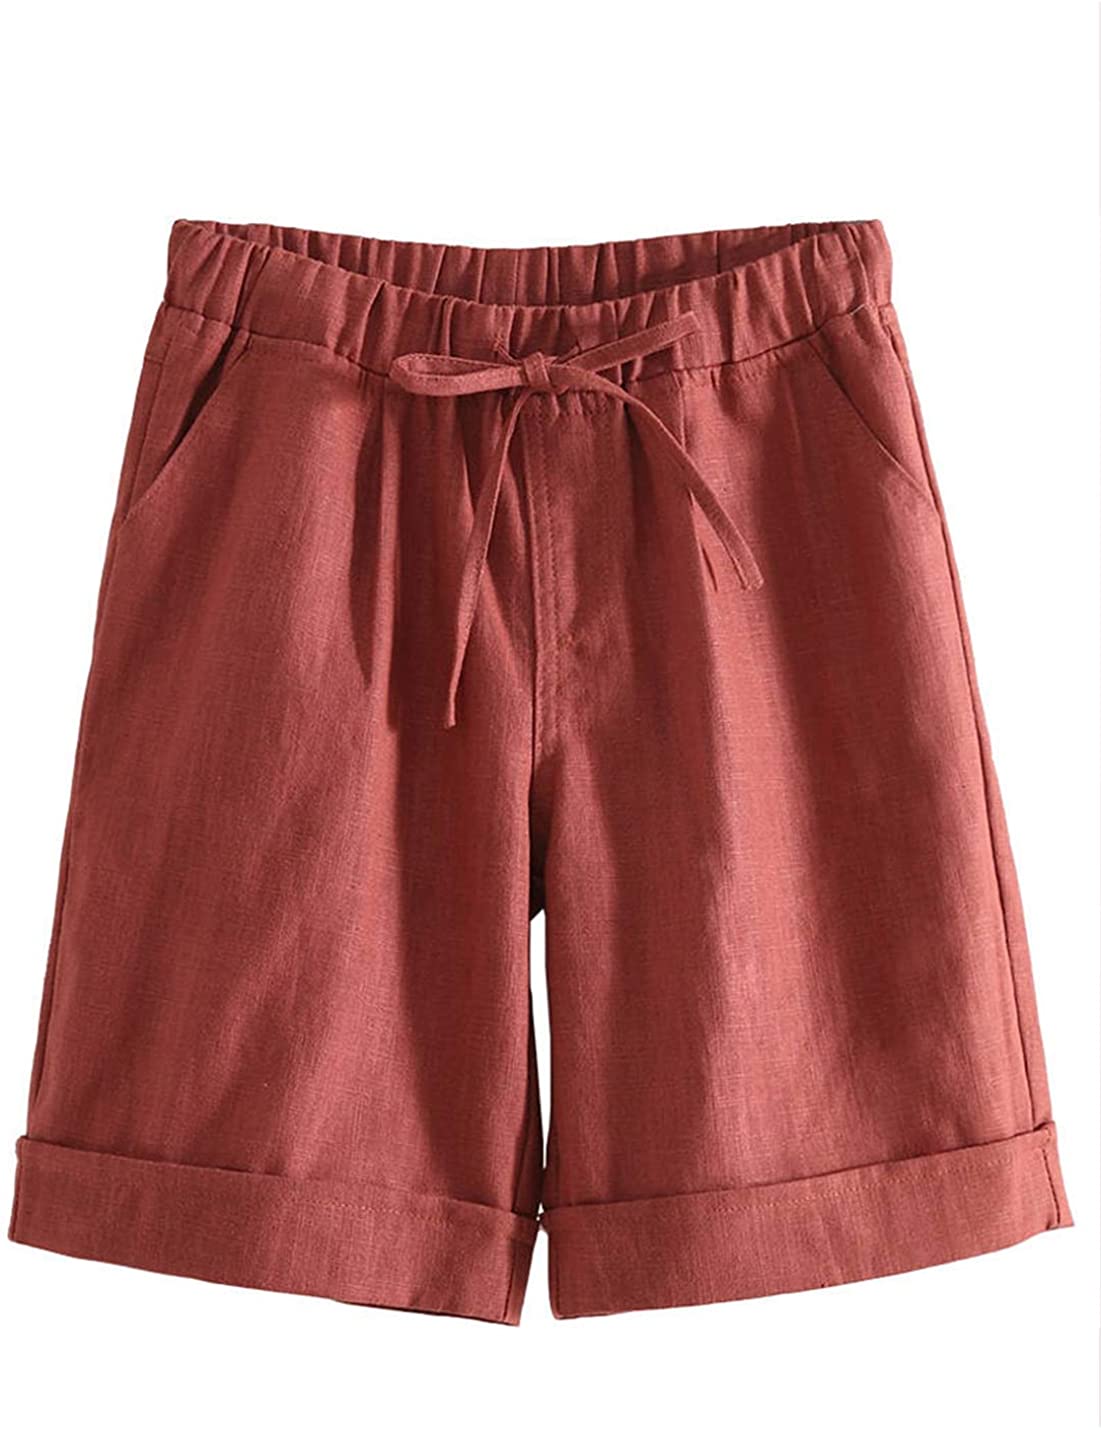 Maternity Casual Shorts Ruffle Hem Elastic Waist Cotton Linen Shorts with Pockets 